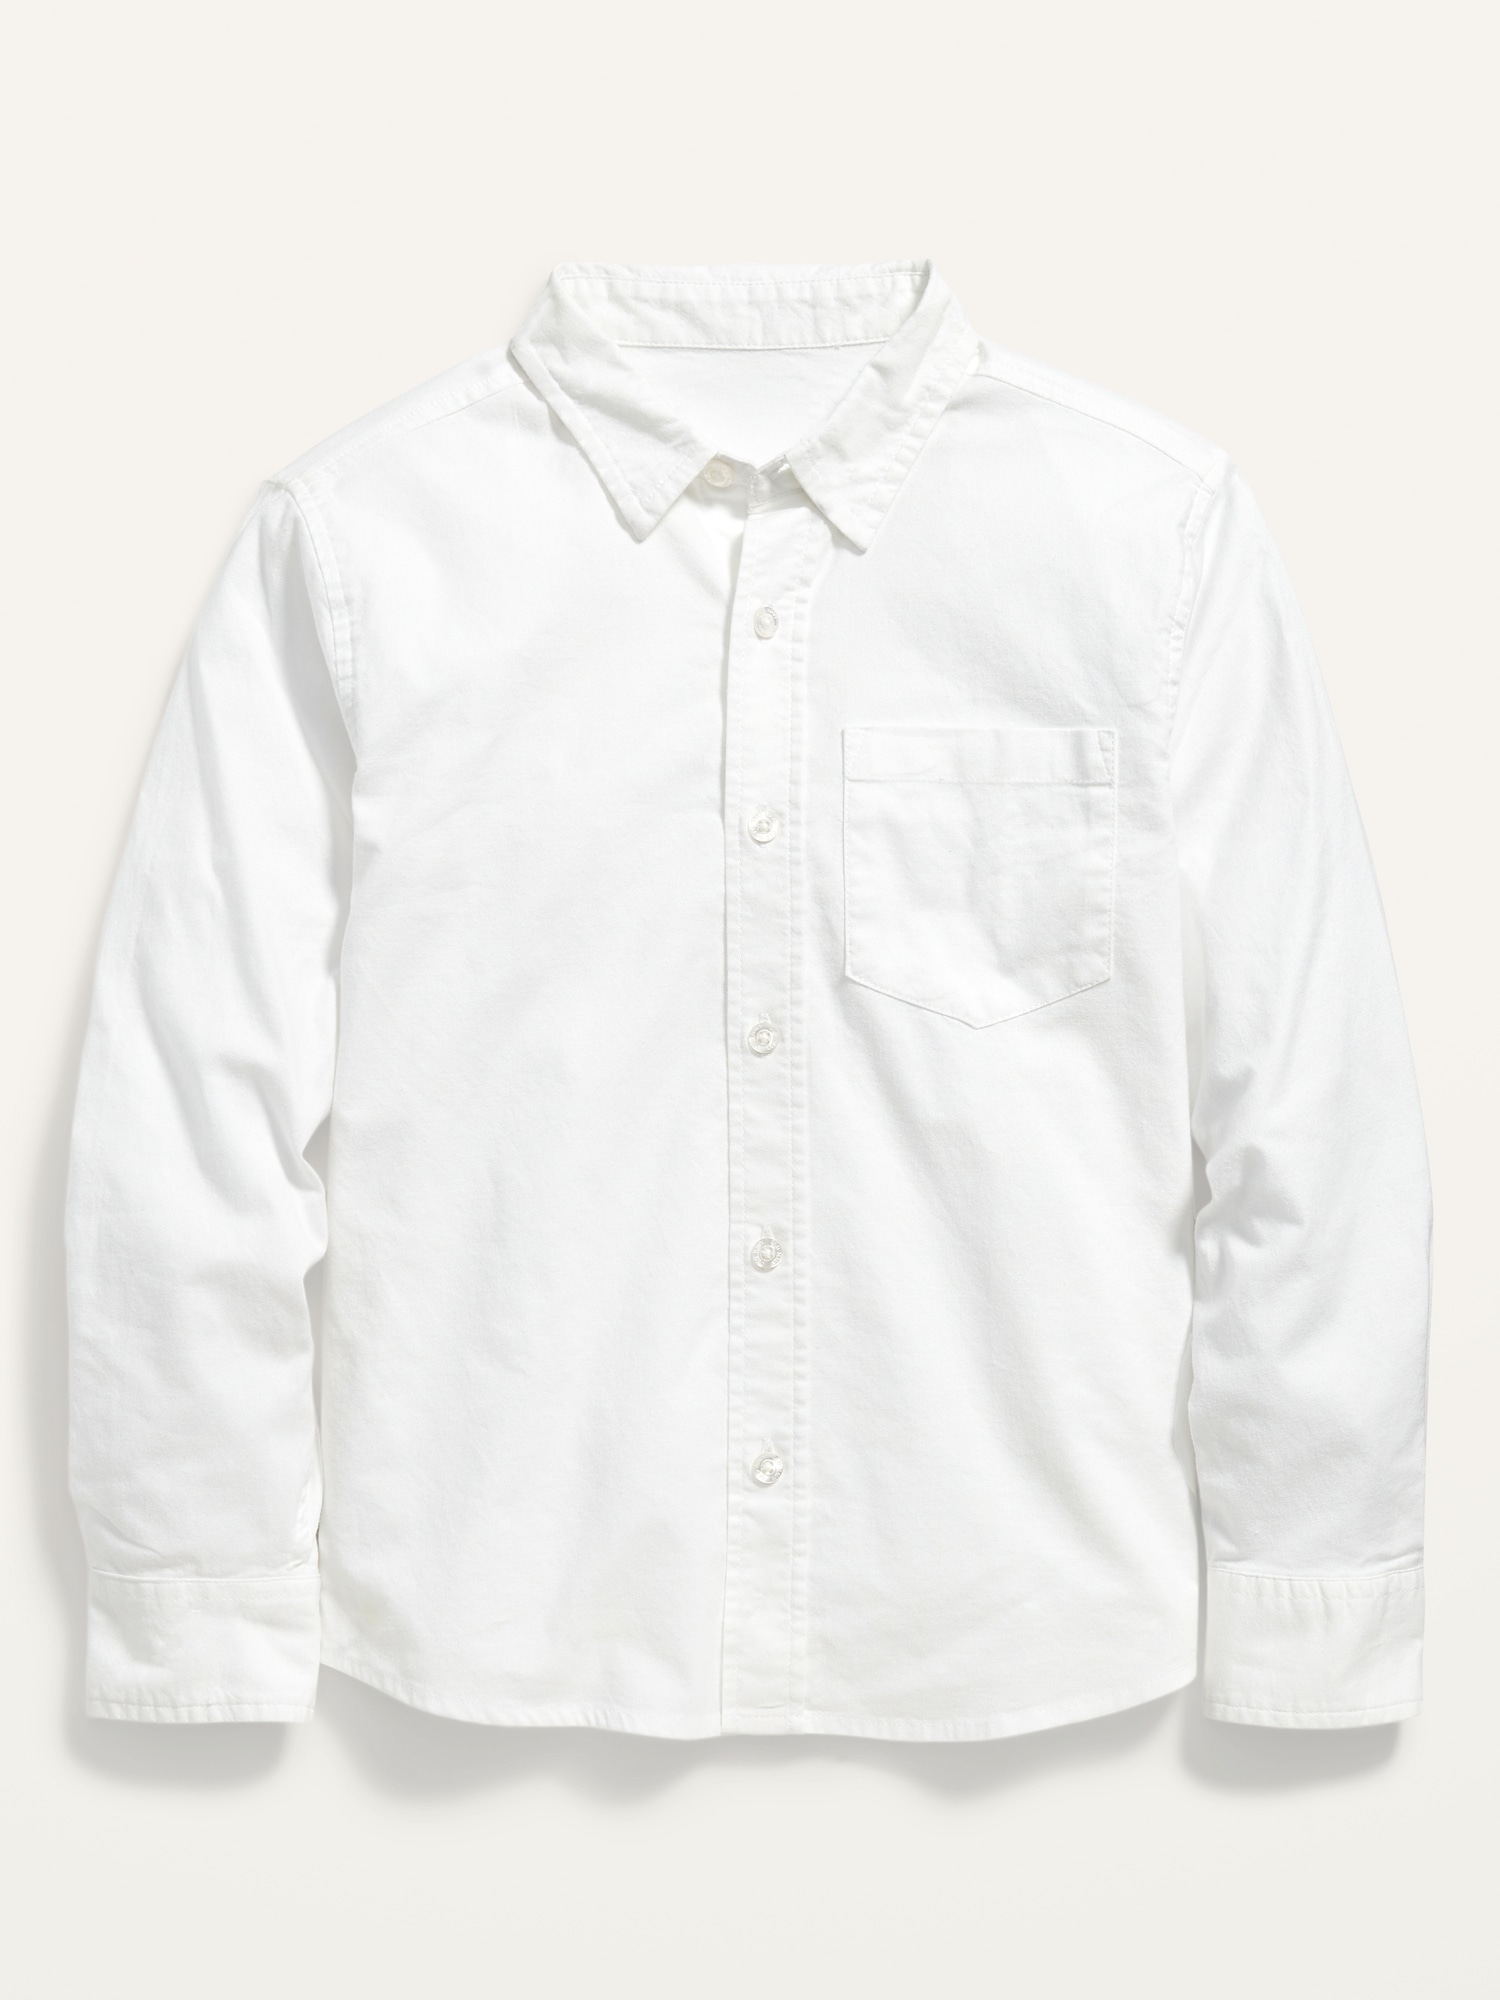 Old Navy Lightweight Oxford Uniform Shirt for Boys white. 1